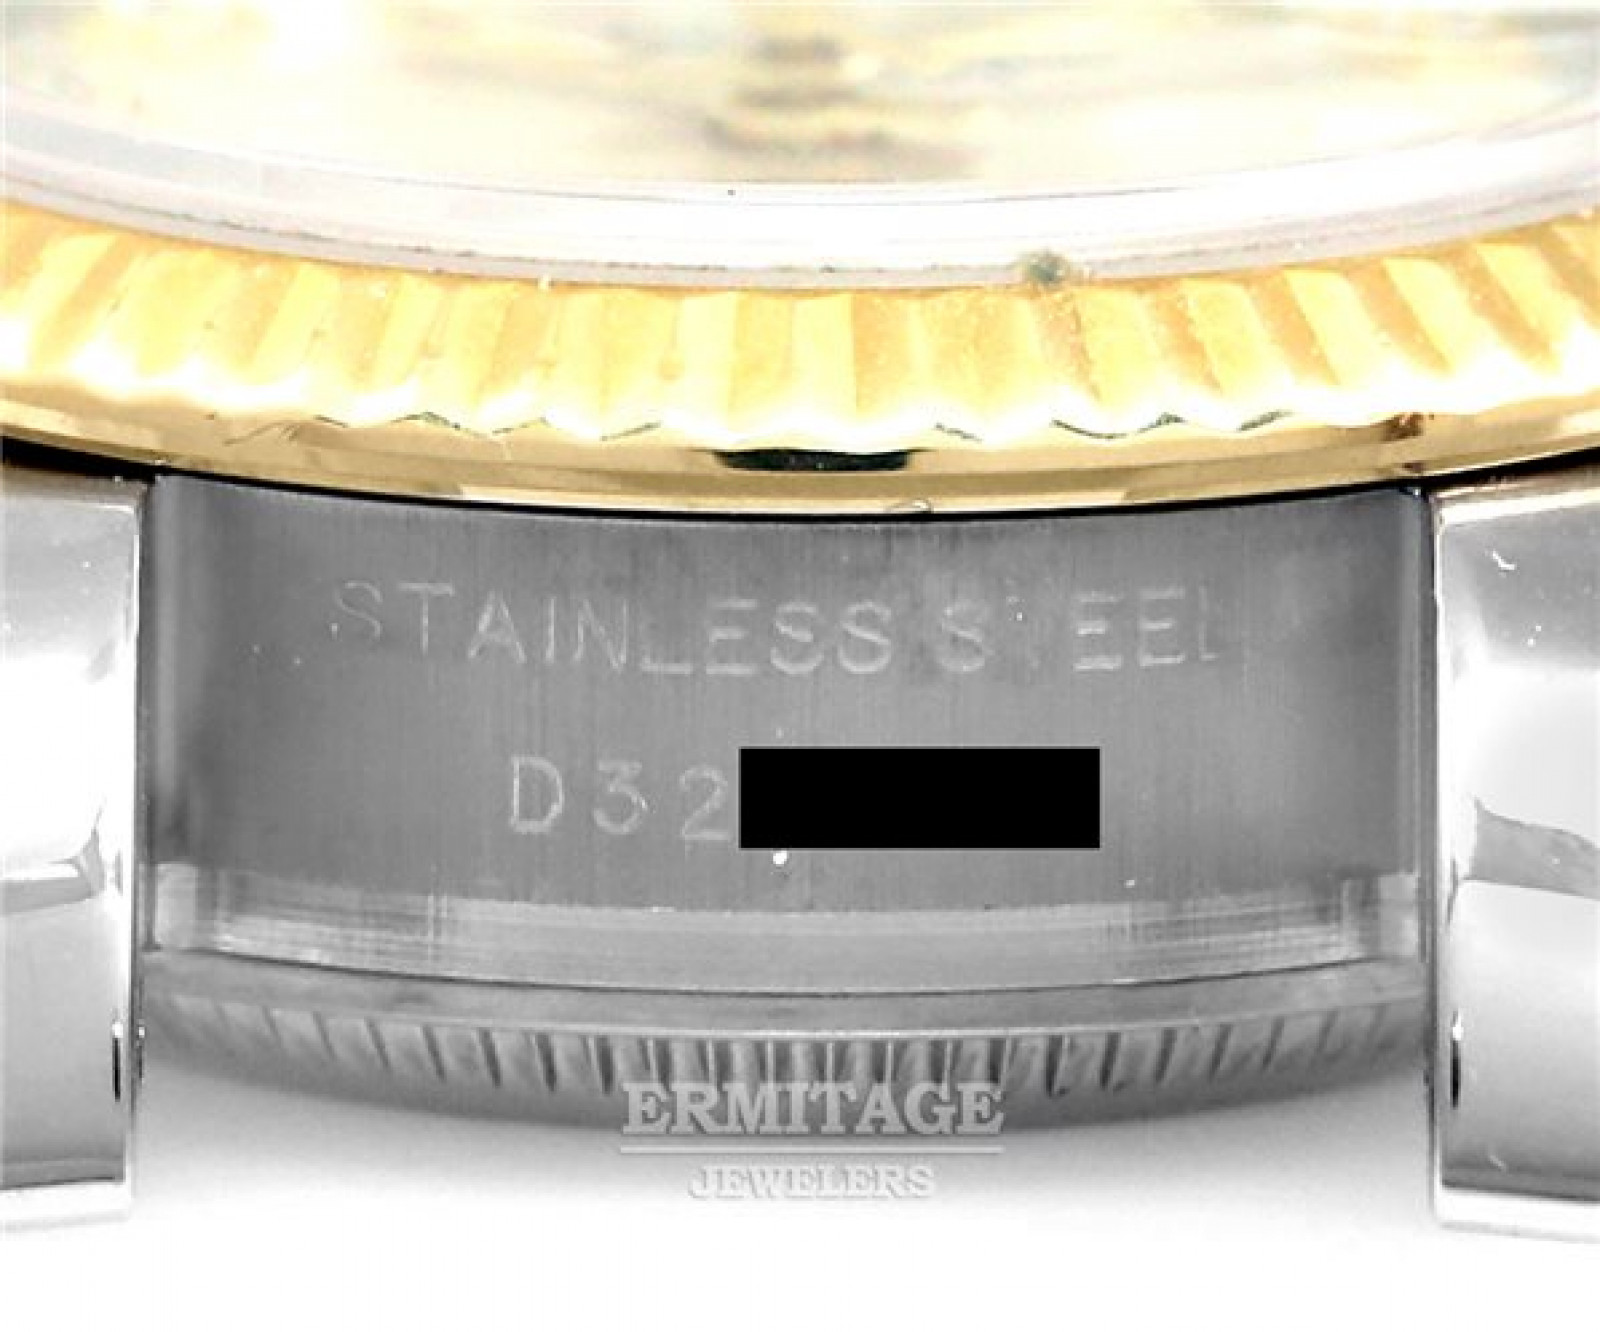 Diamond Dial Rolex Datejust 179173 Gold & Steel